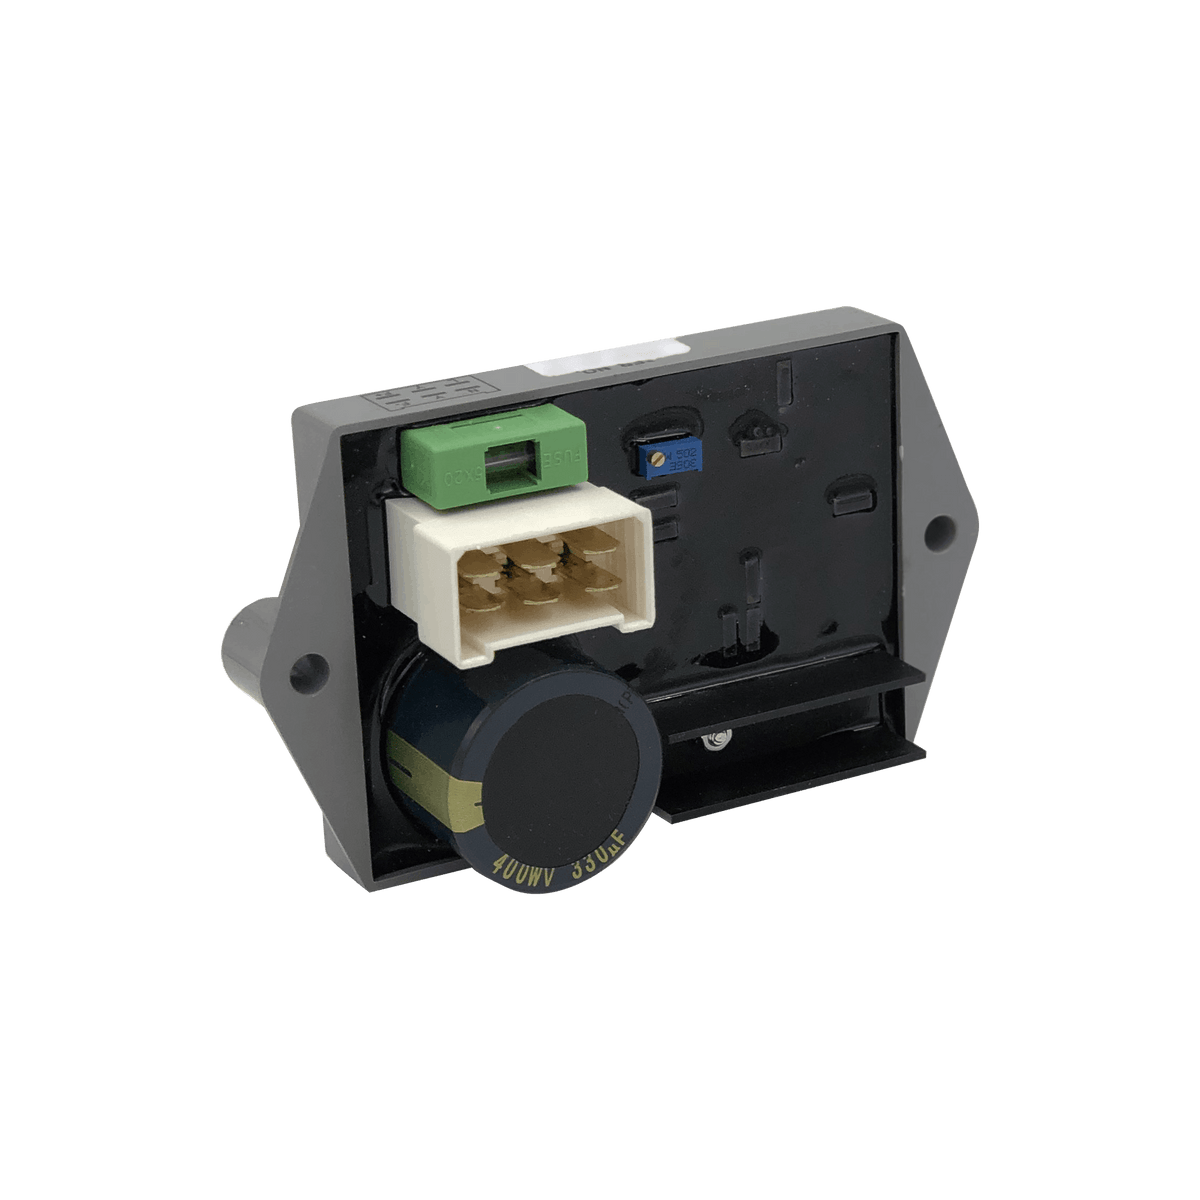 06REG24 Voltage Regulator for an exciter type mobile diesel generator